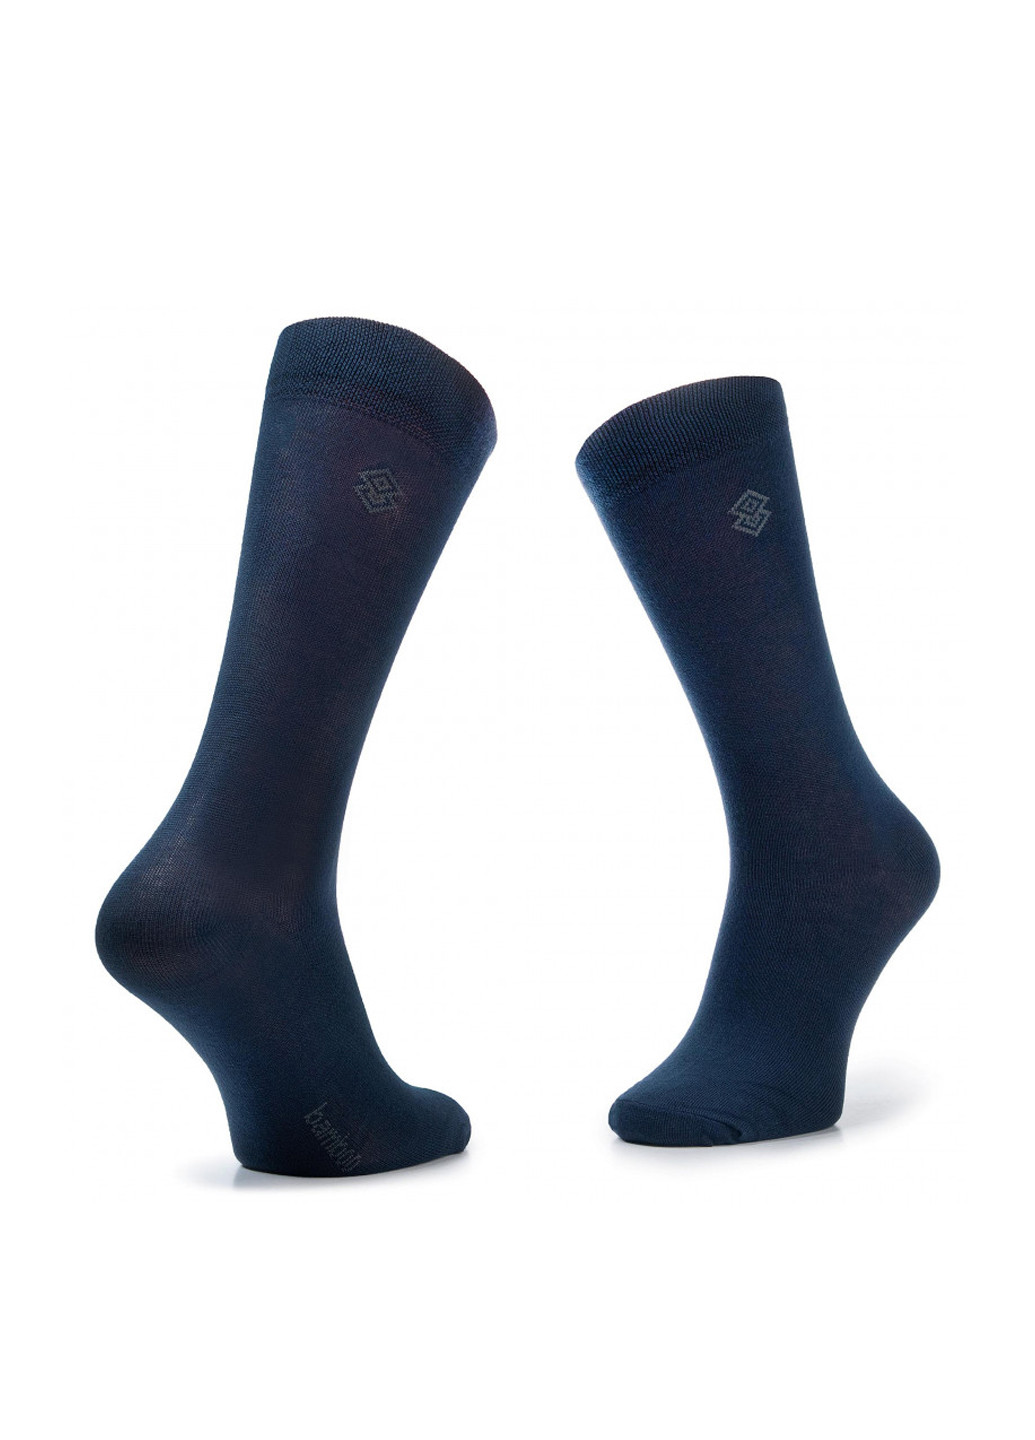 Шкарпетки чоловічі SKARPETA  BAMBOO 42-44 Lasocki SKARPETA BAMBOO 42-44 однотонные тёмно-синие повседневные